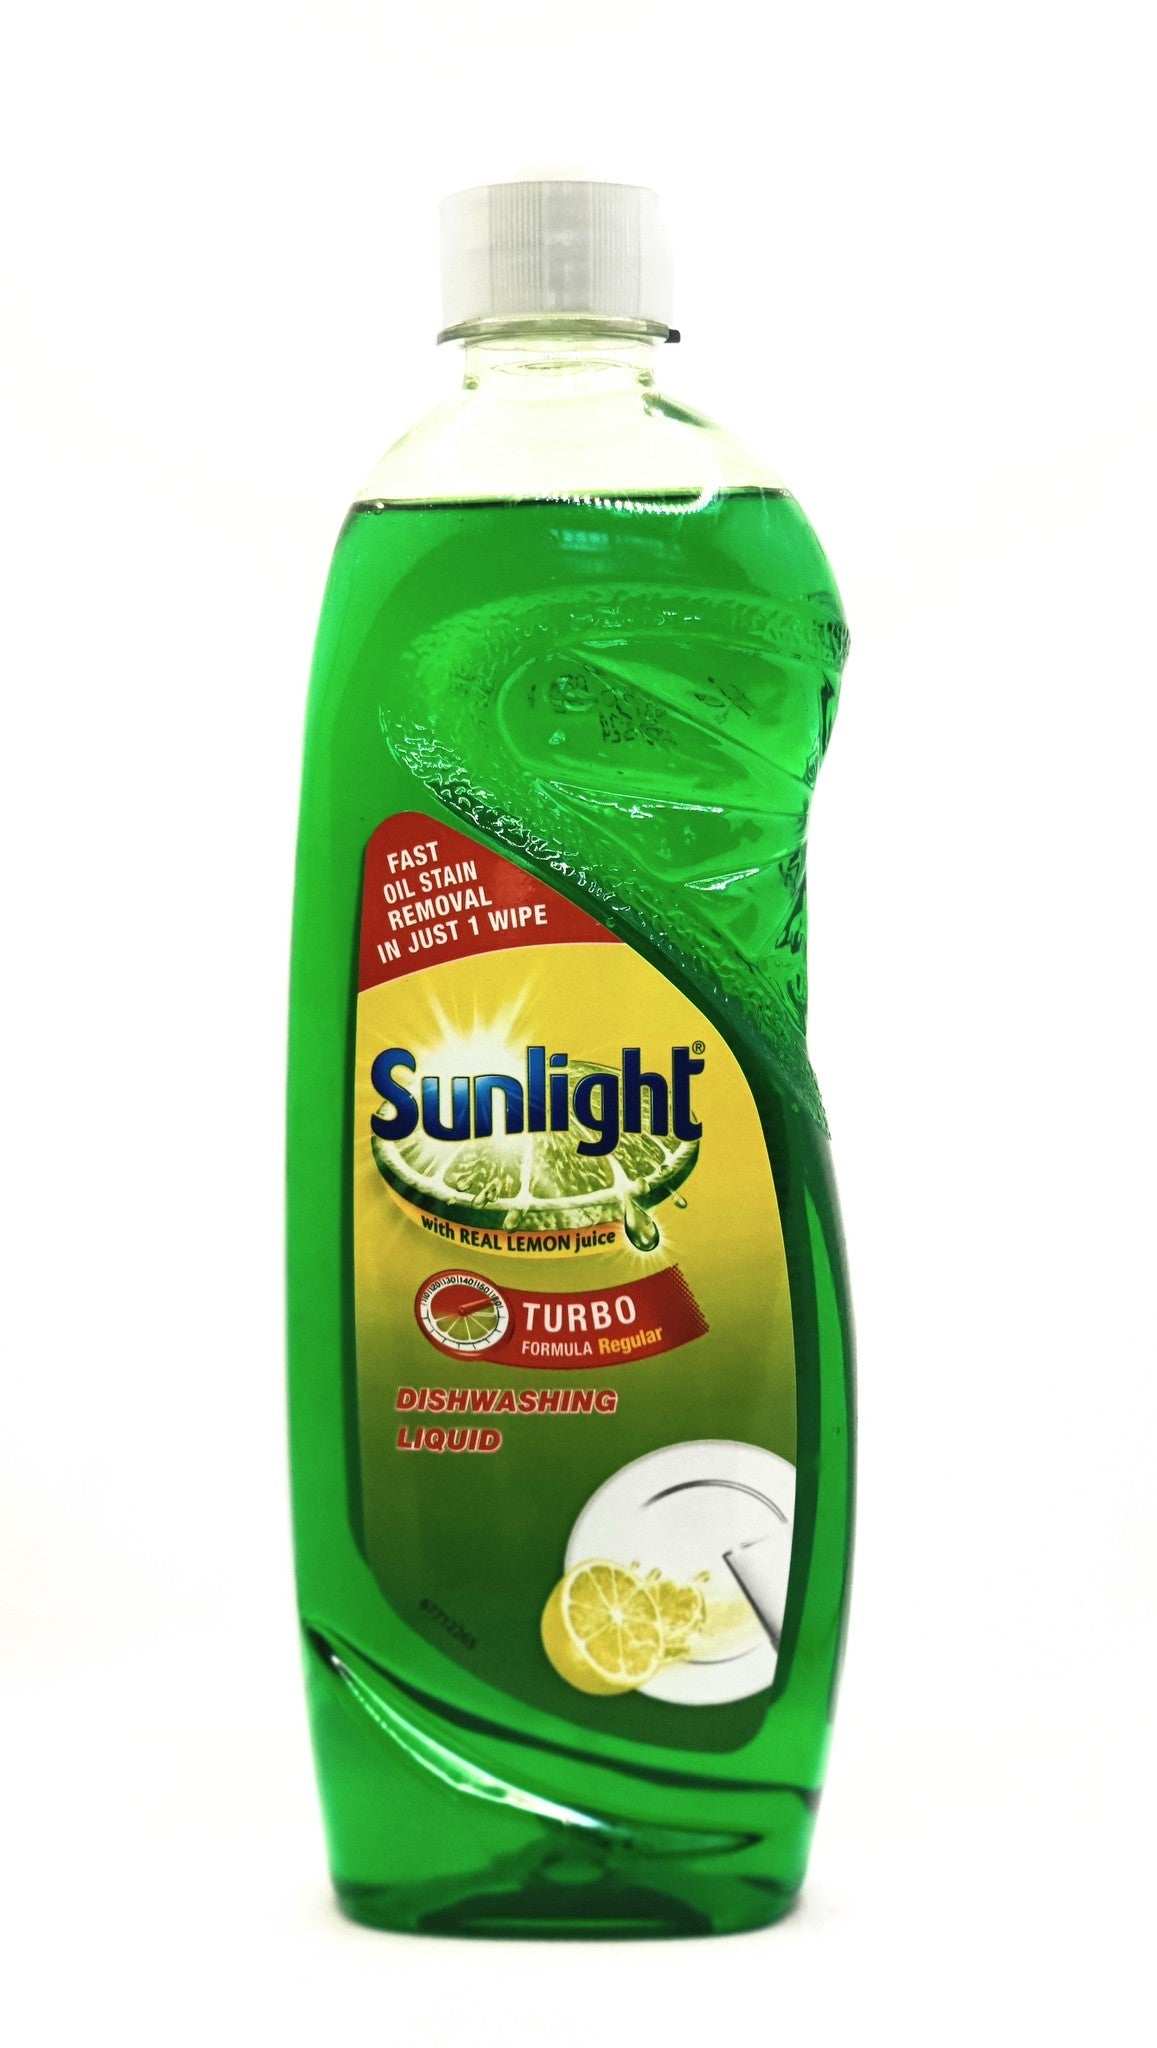 400 millilitre bottle of sunlight turbo formula regular dishwashing soap